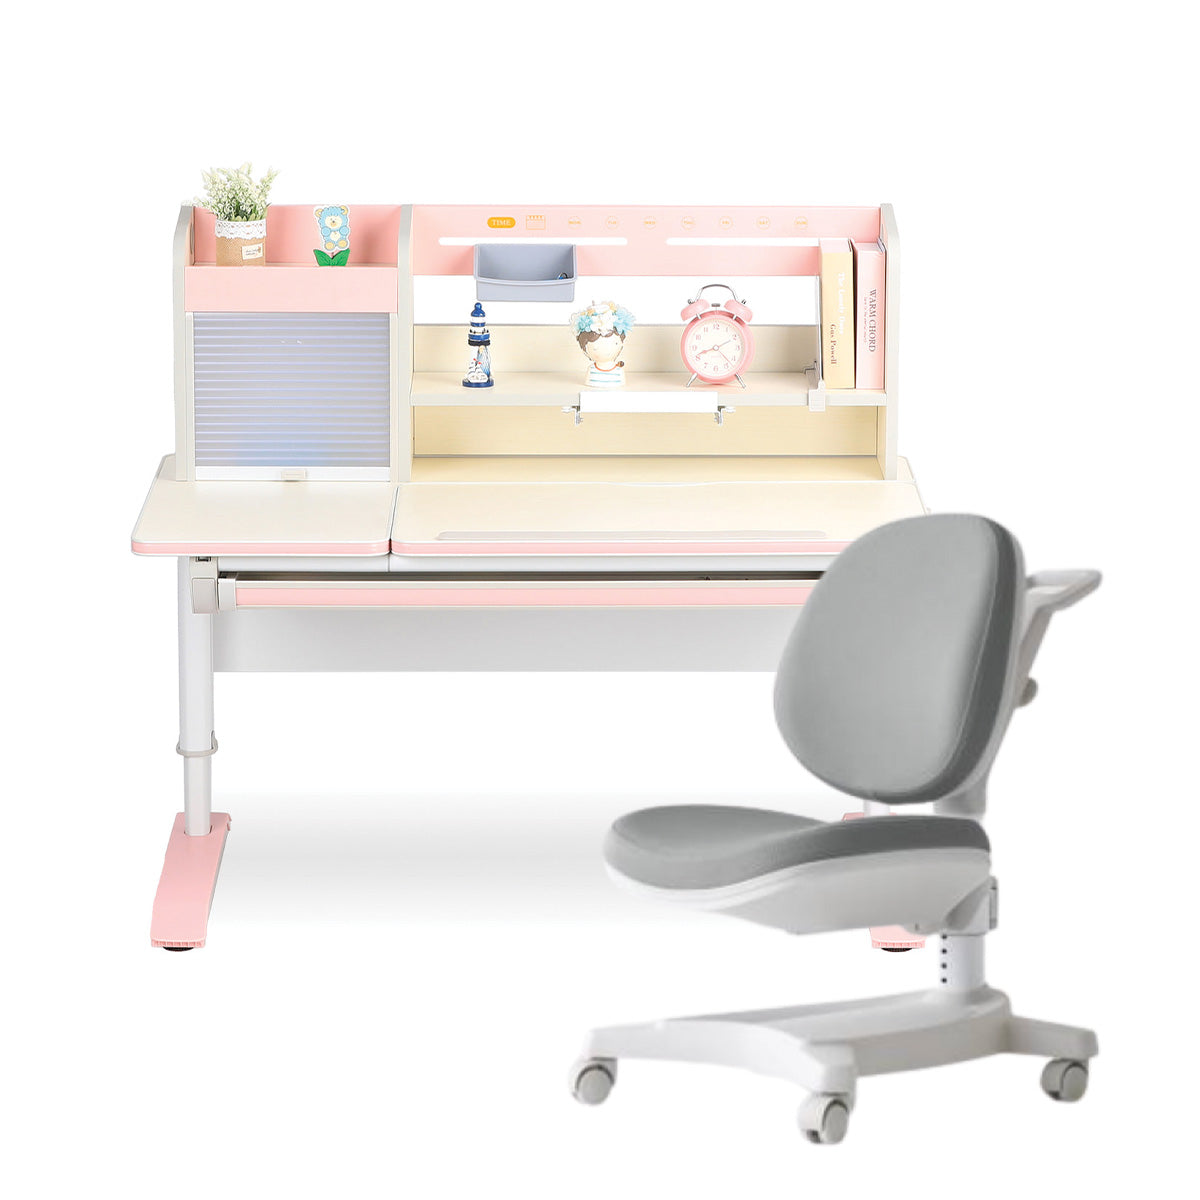 Impact Ergo-Growing Study Desk And Chair Set 1200mm x 700mm, IM-D12L1200V2-PK